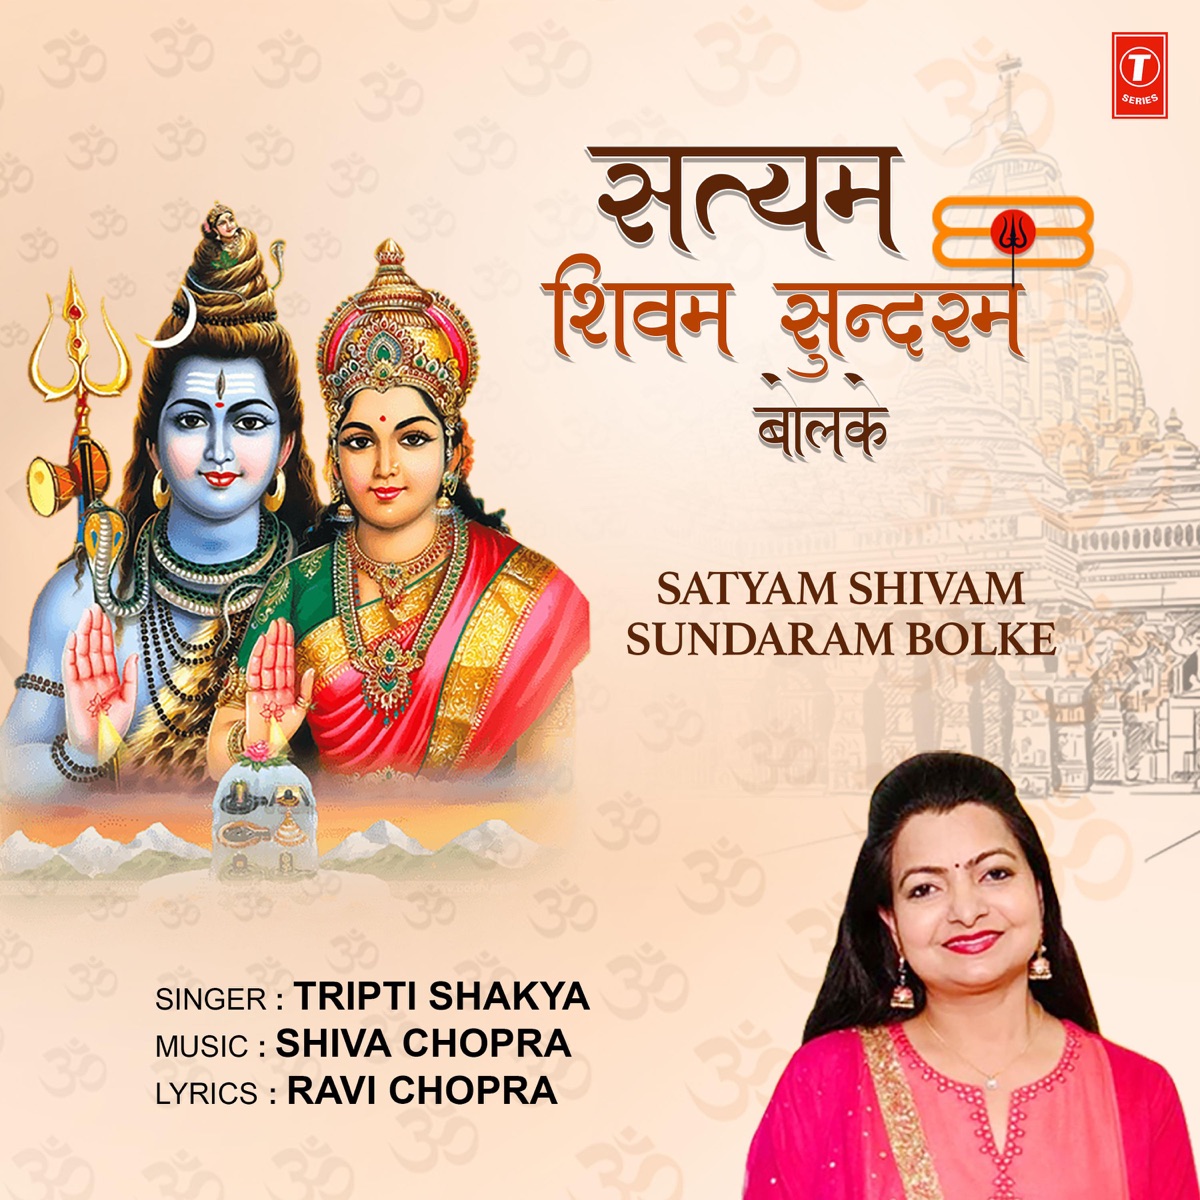 Stream episode Satyam Shivam Sundaram by Brahma Kumaris podcast | Listen  online for free on SoundCloud